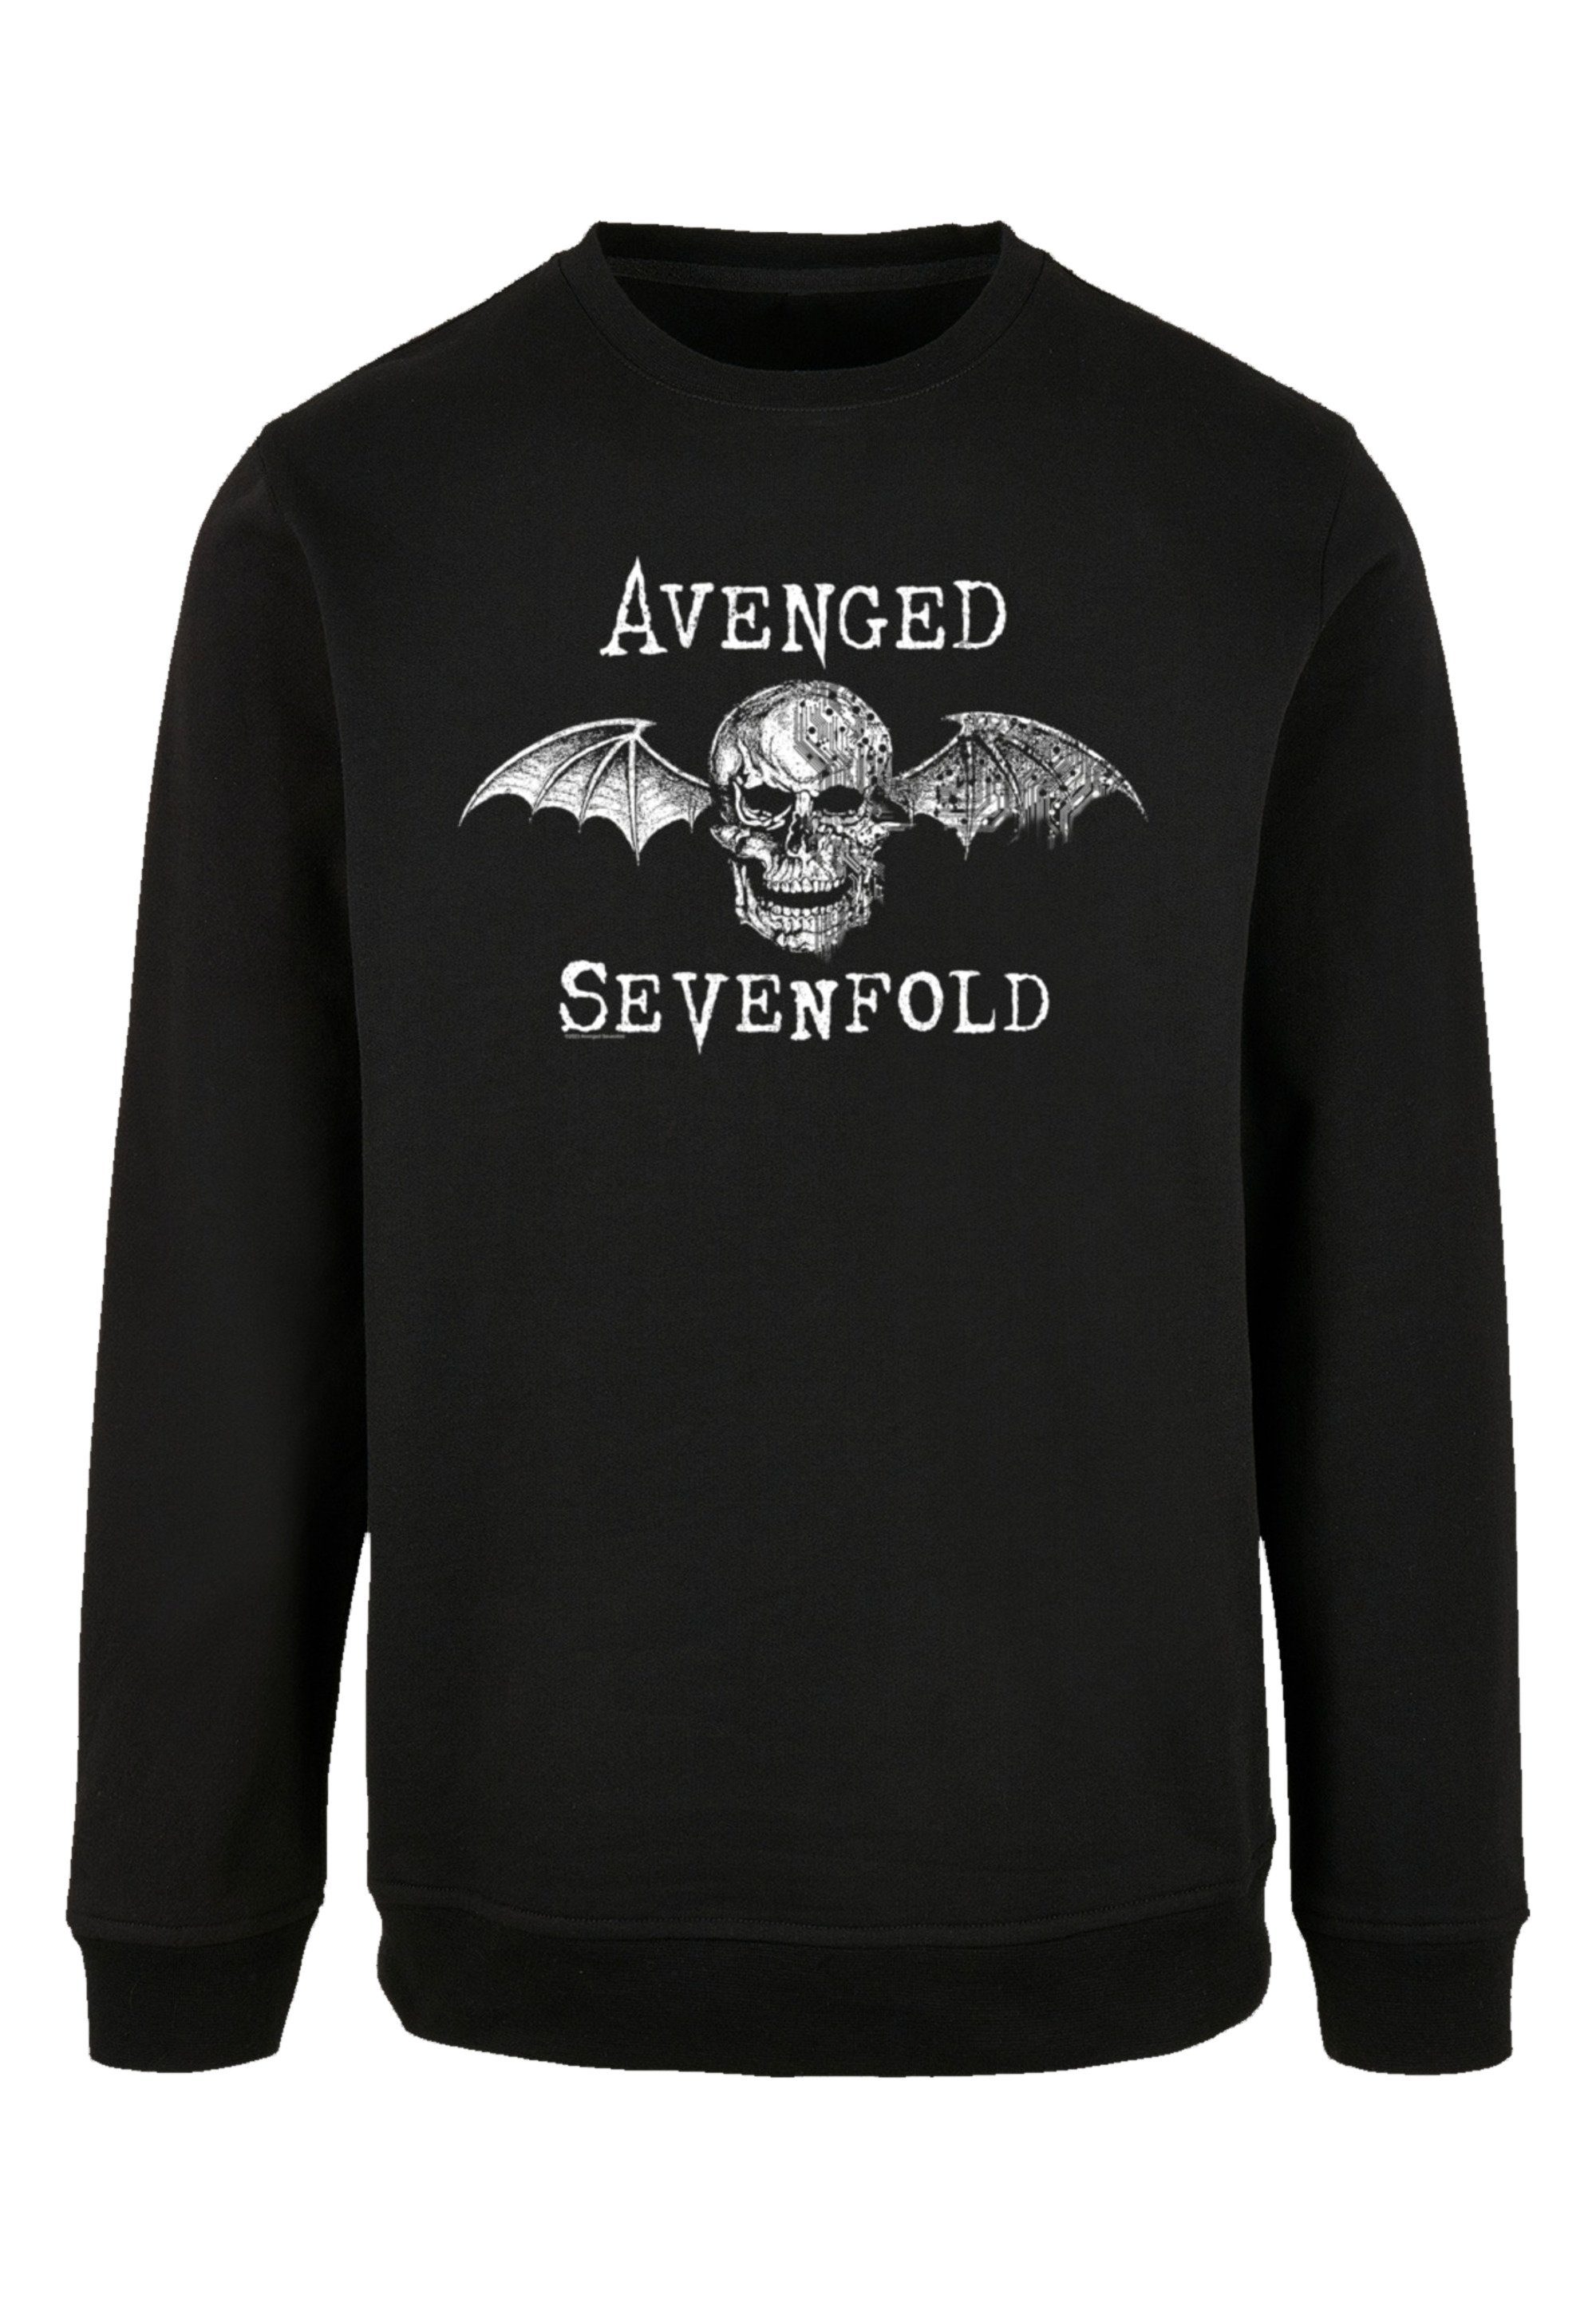 Sevenfold Bat Cyborg Premium Rock-Musik Metal Sweatshirt F4NT4STIC Band Band, Qualität, Avenged Rock